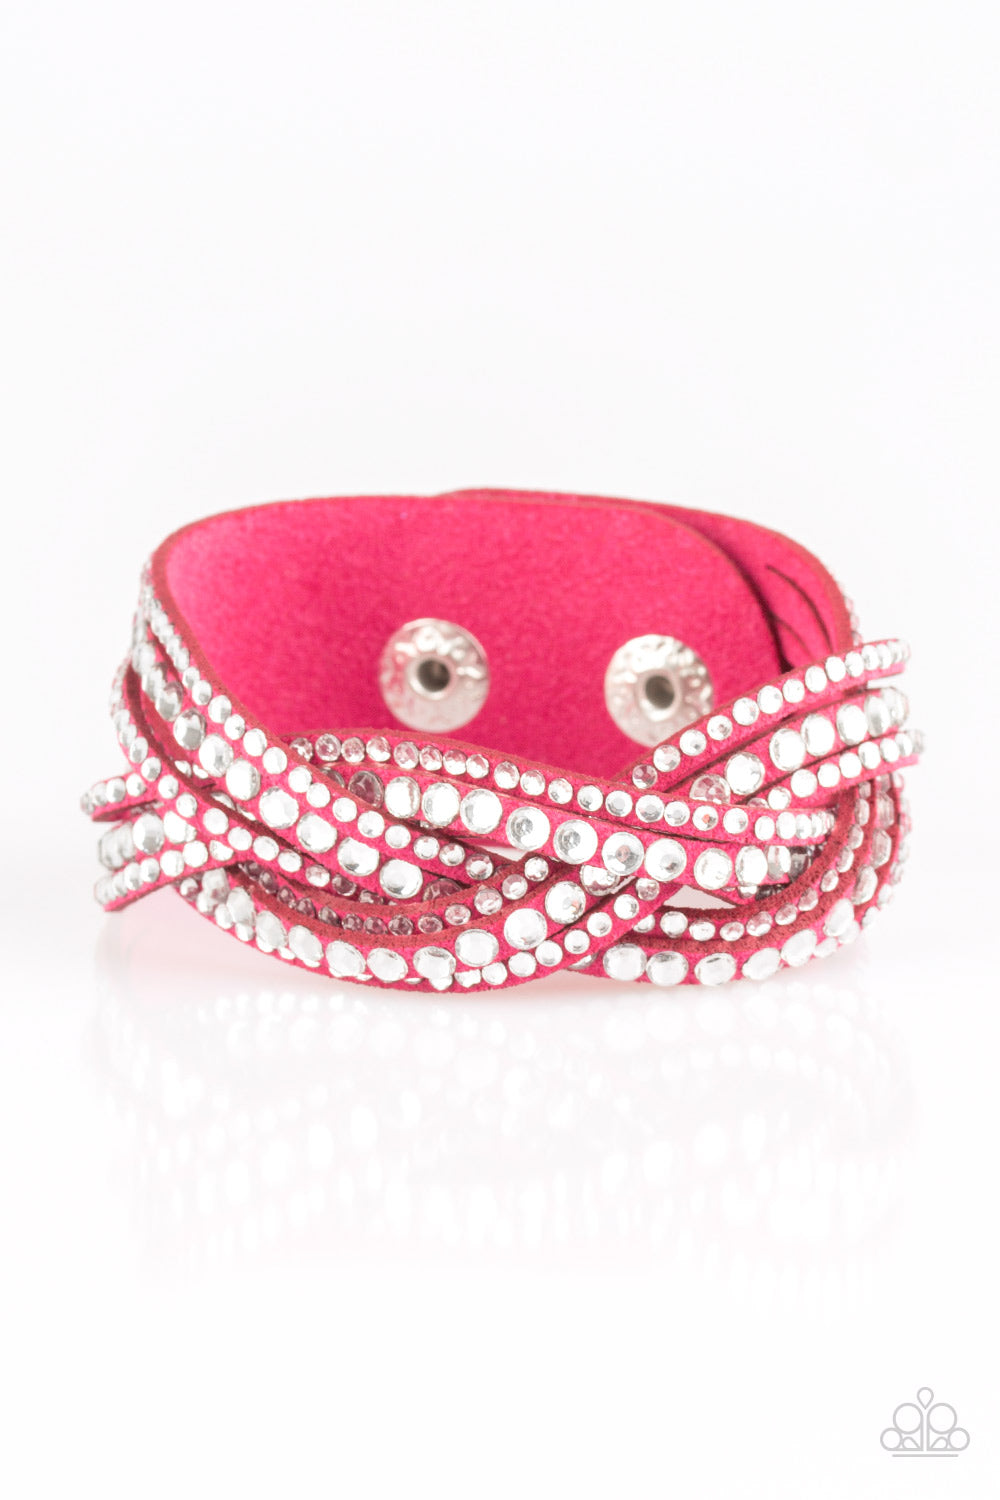 Ladies Pink Leather Wrap Bracelet Personalised / Engraved Free Gift Box &  Card | eBay